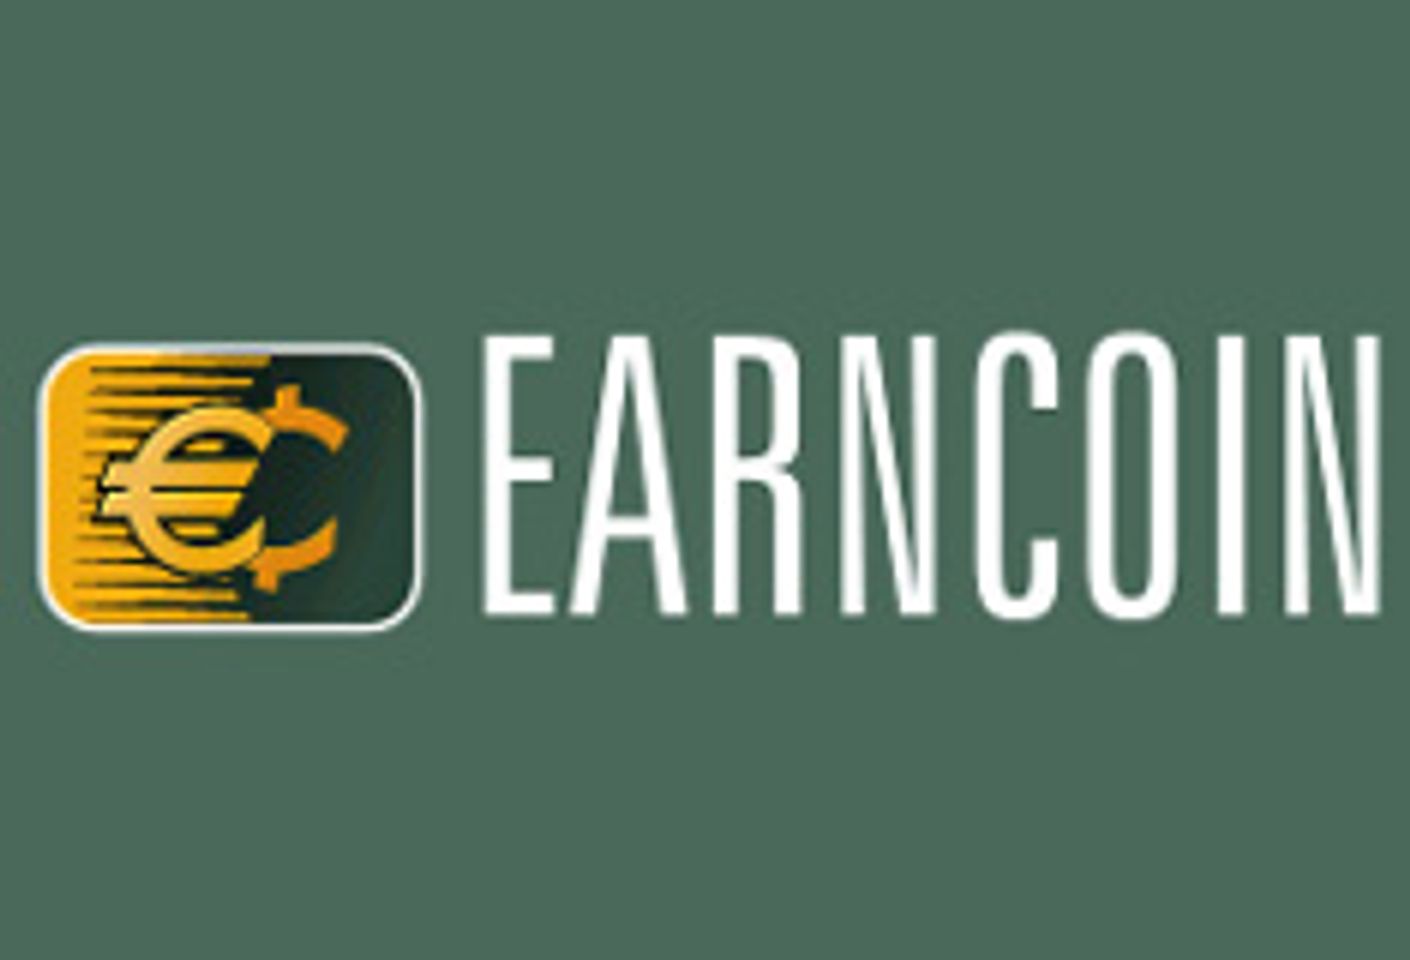 New Partnership Program from EarnCoin.com